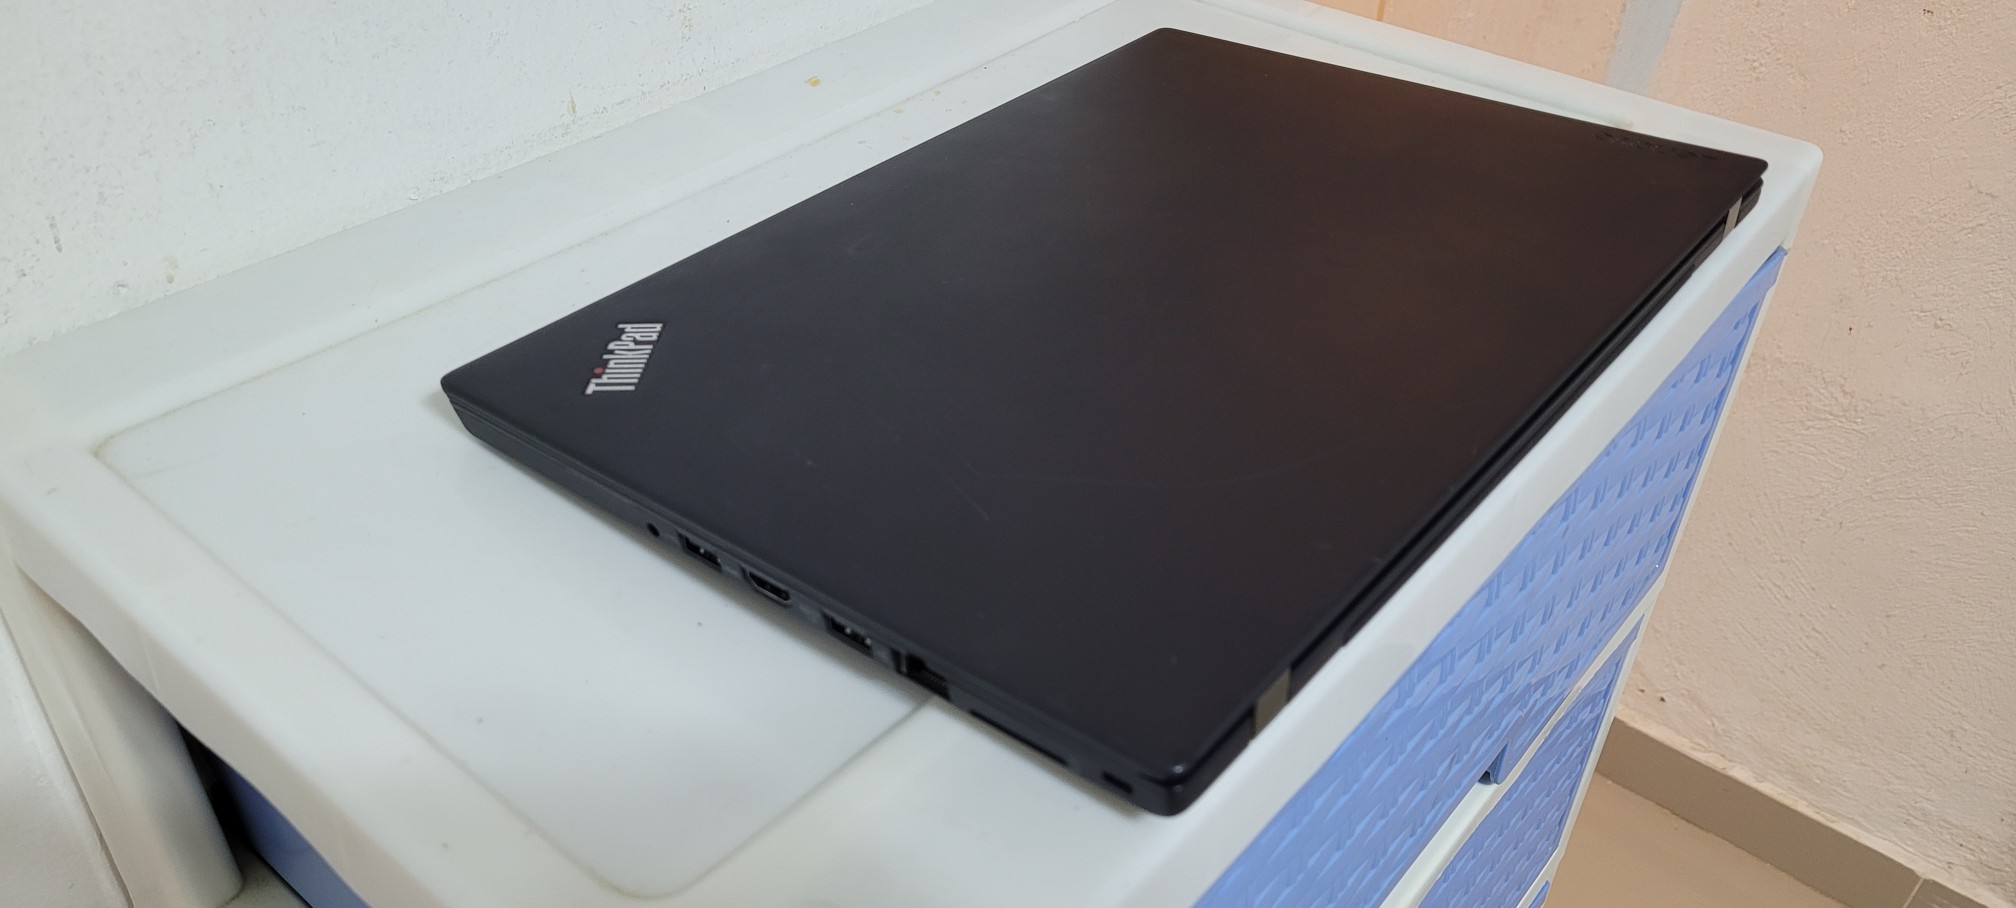 computadoras y laptops - laptop lenovo 14 Pulg Core i7 Ram 8gb Disco 256gb SSD 1080p 2